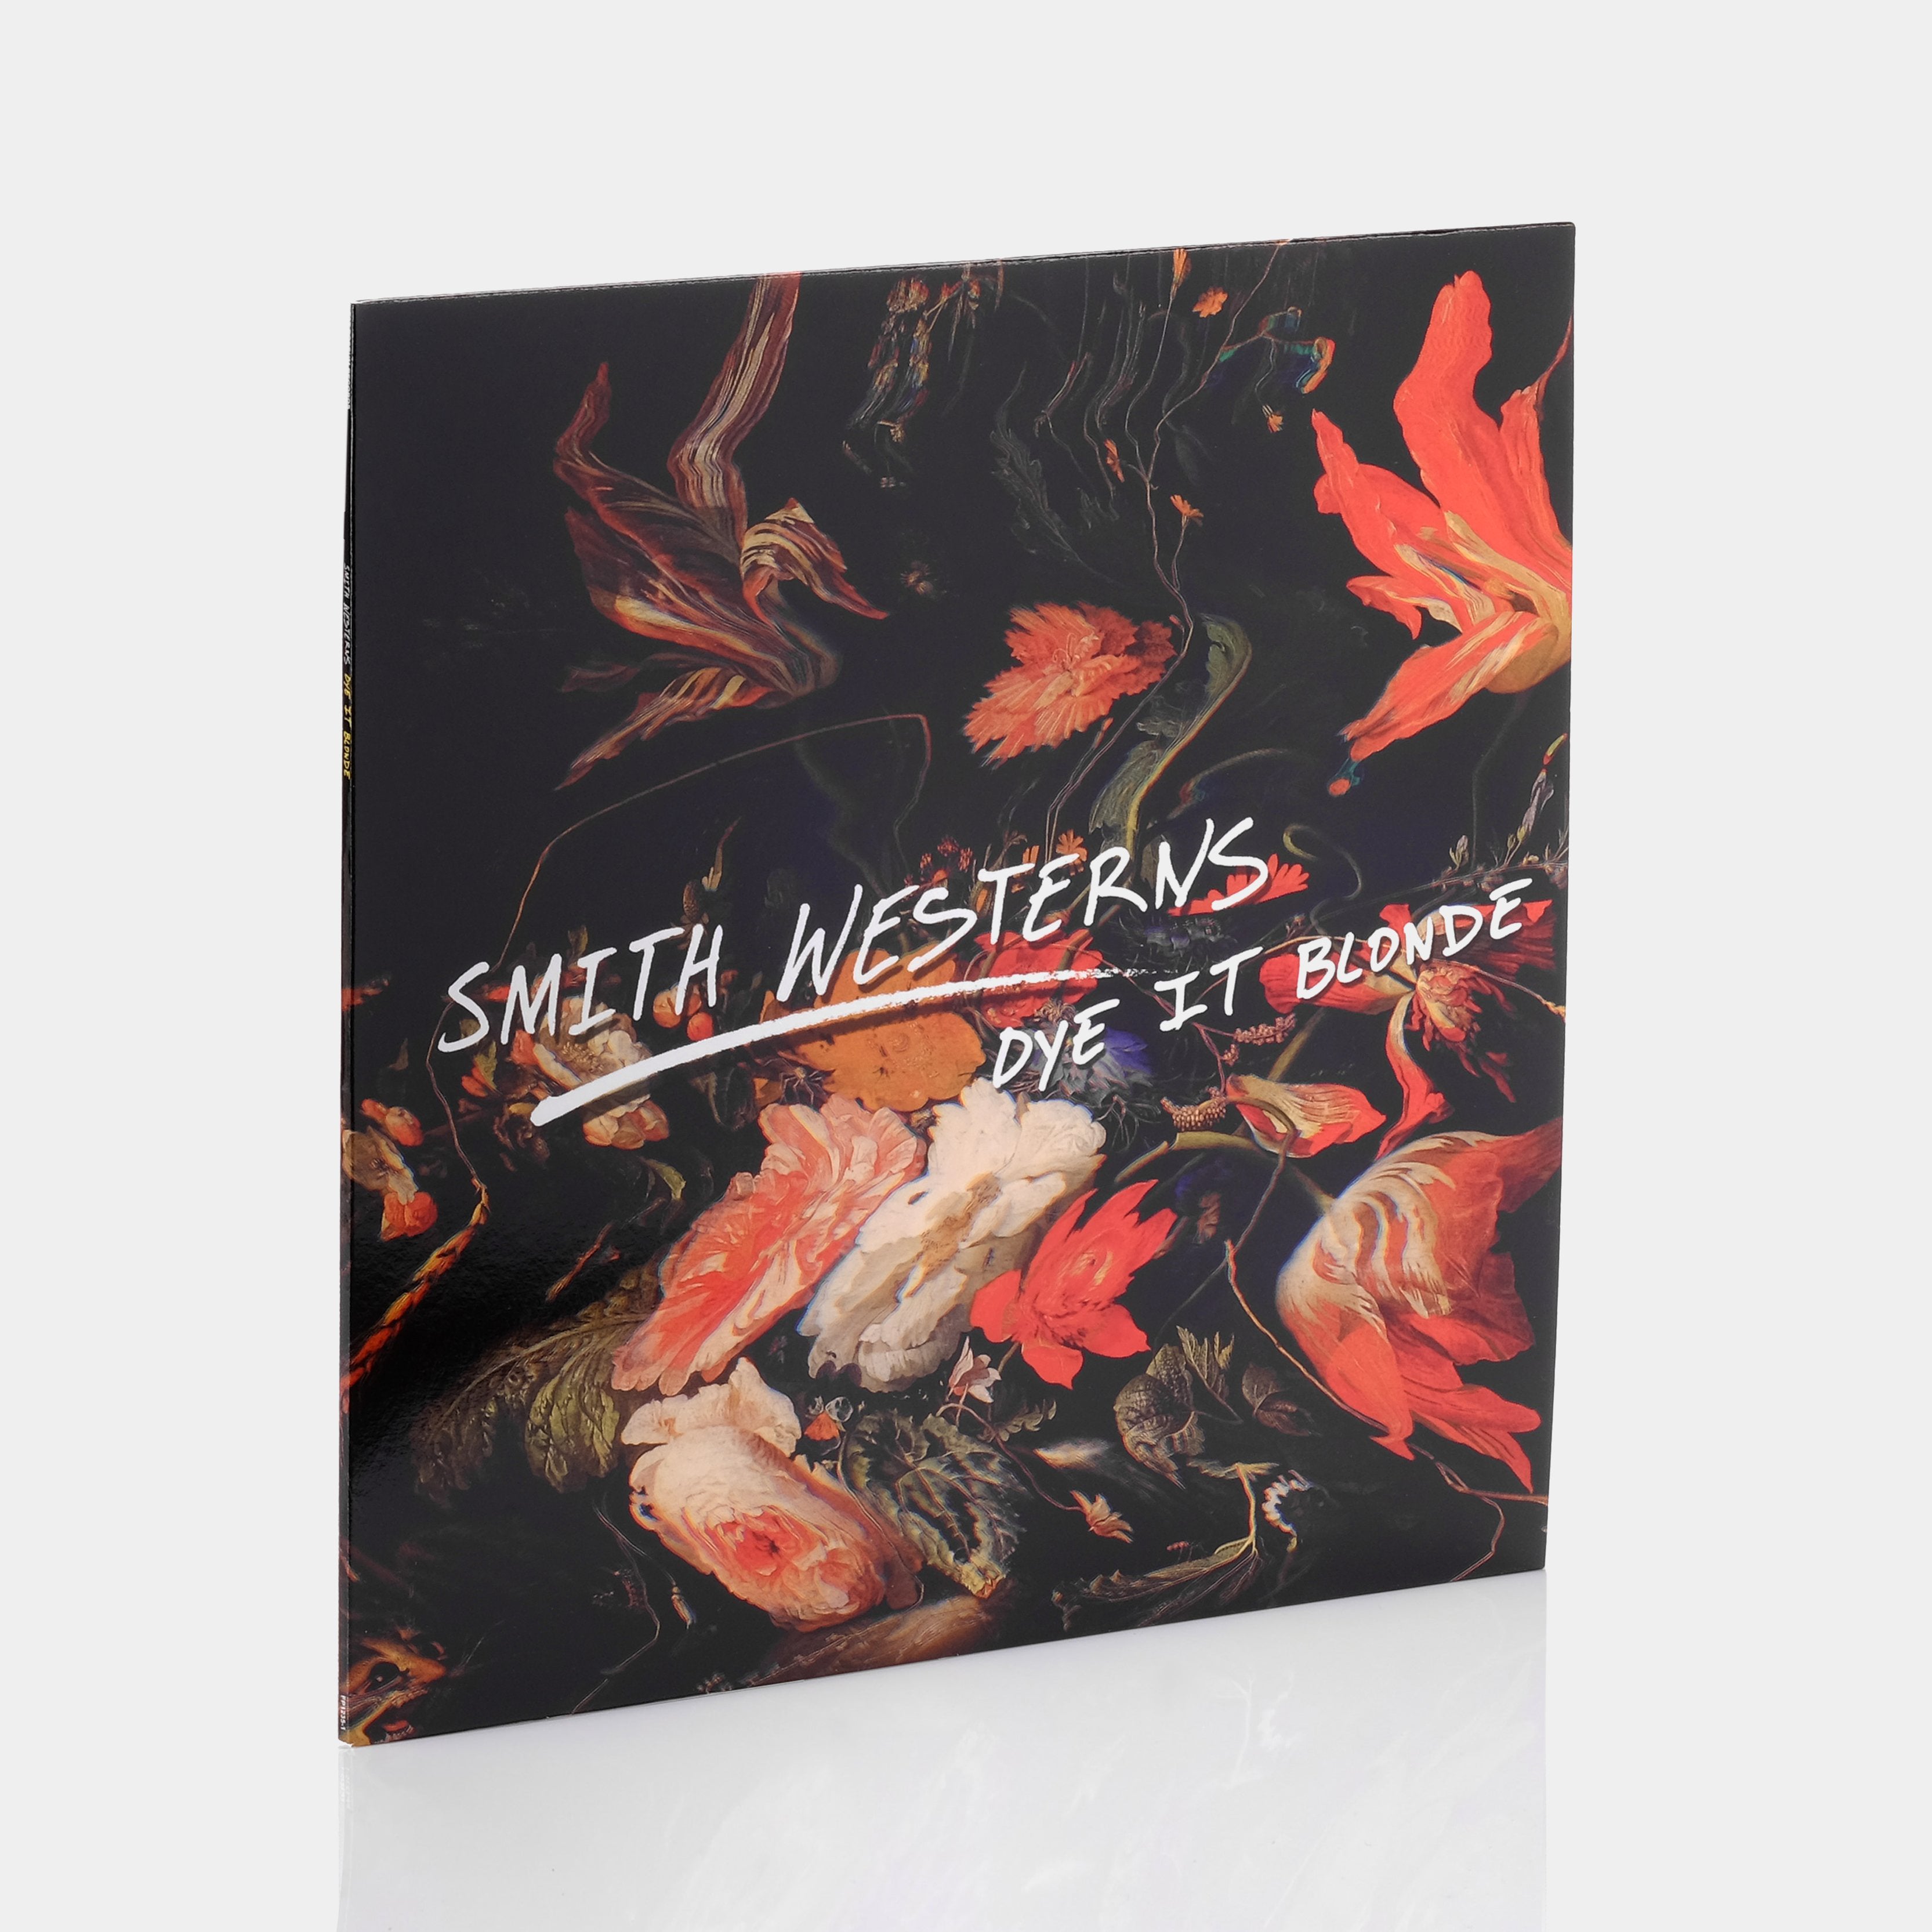 Smith Westerns - Dye It Blonde LP Vinyl Record